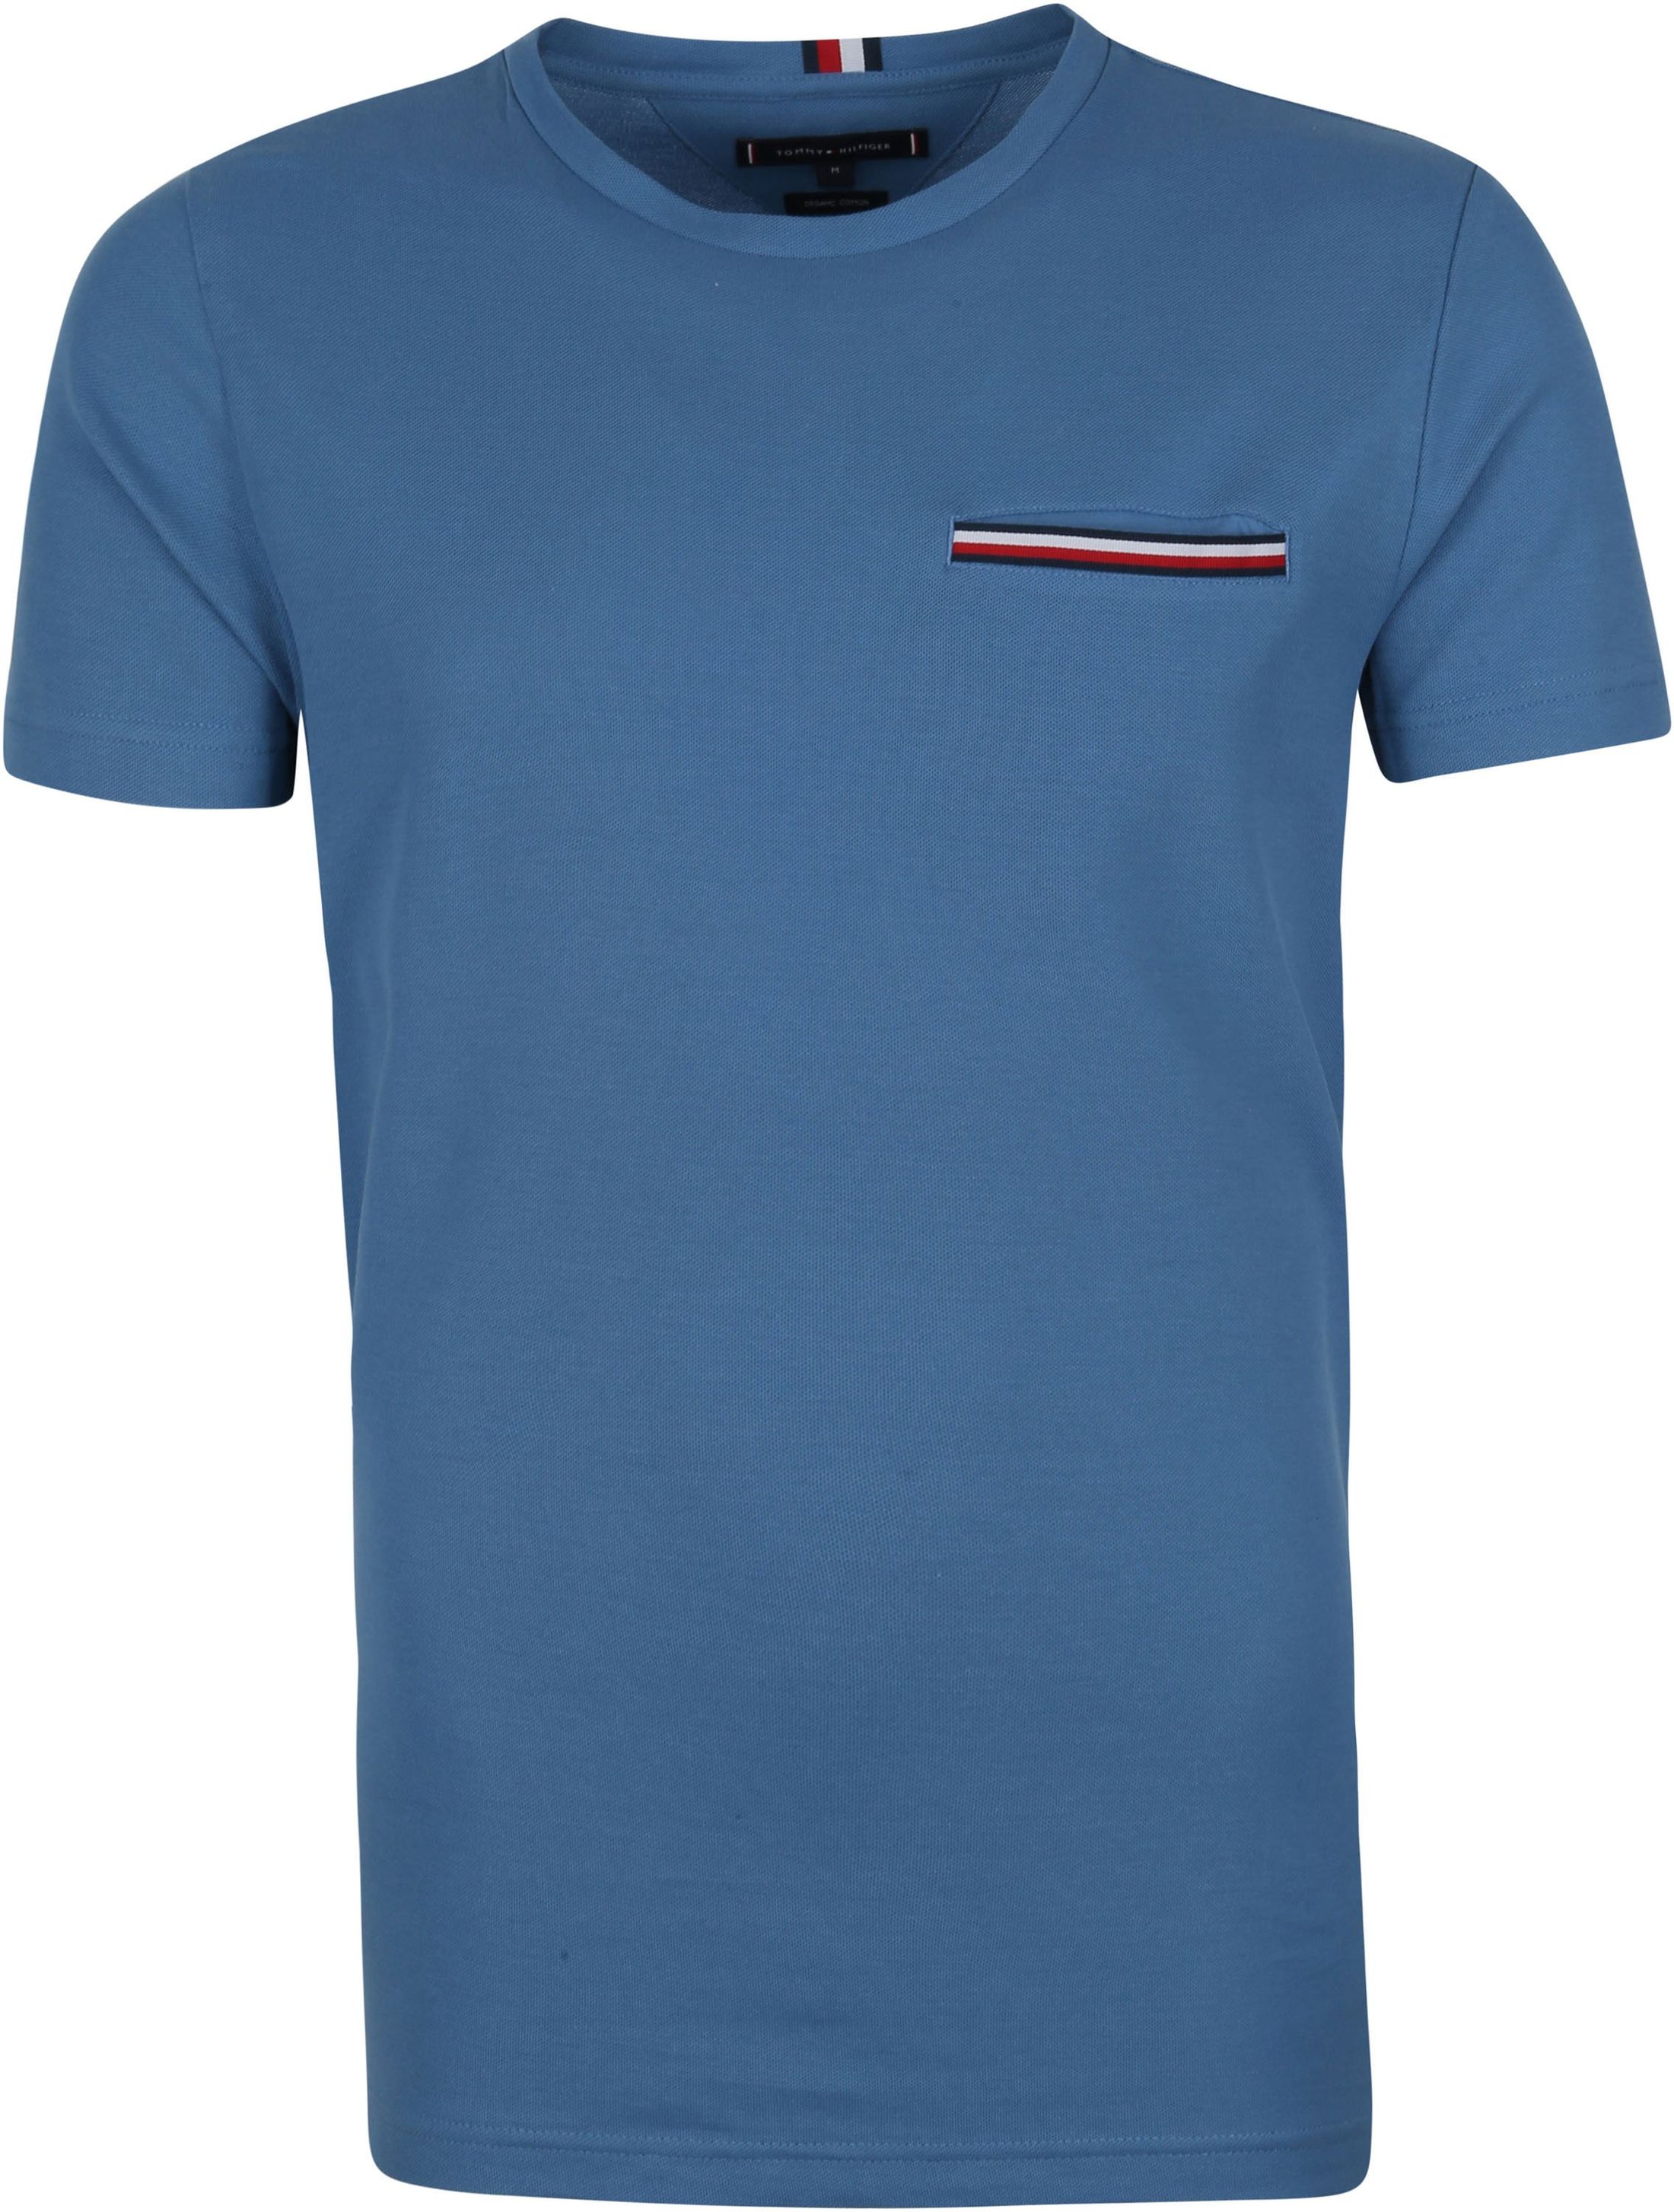 Tommy Hilfiger Pocket Flex T-shirt Blue size L